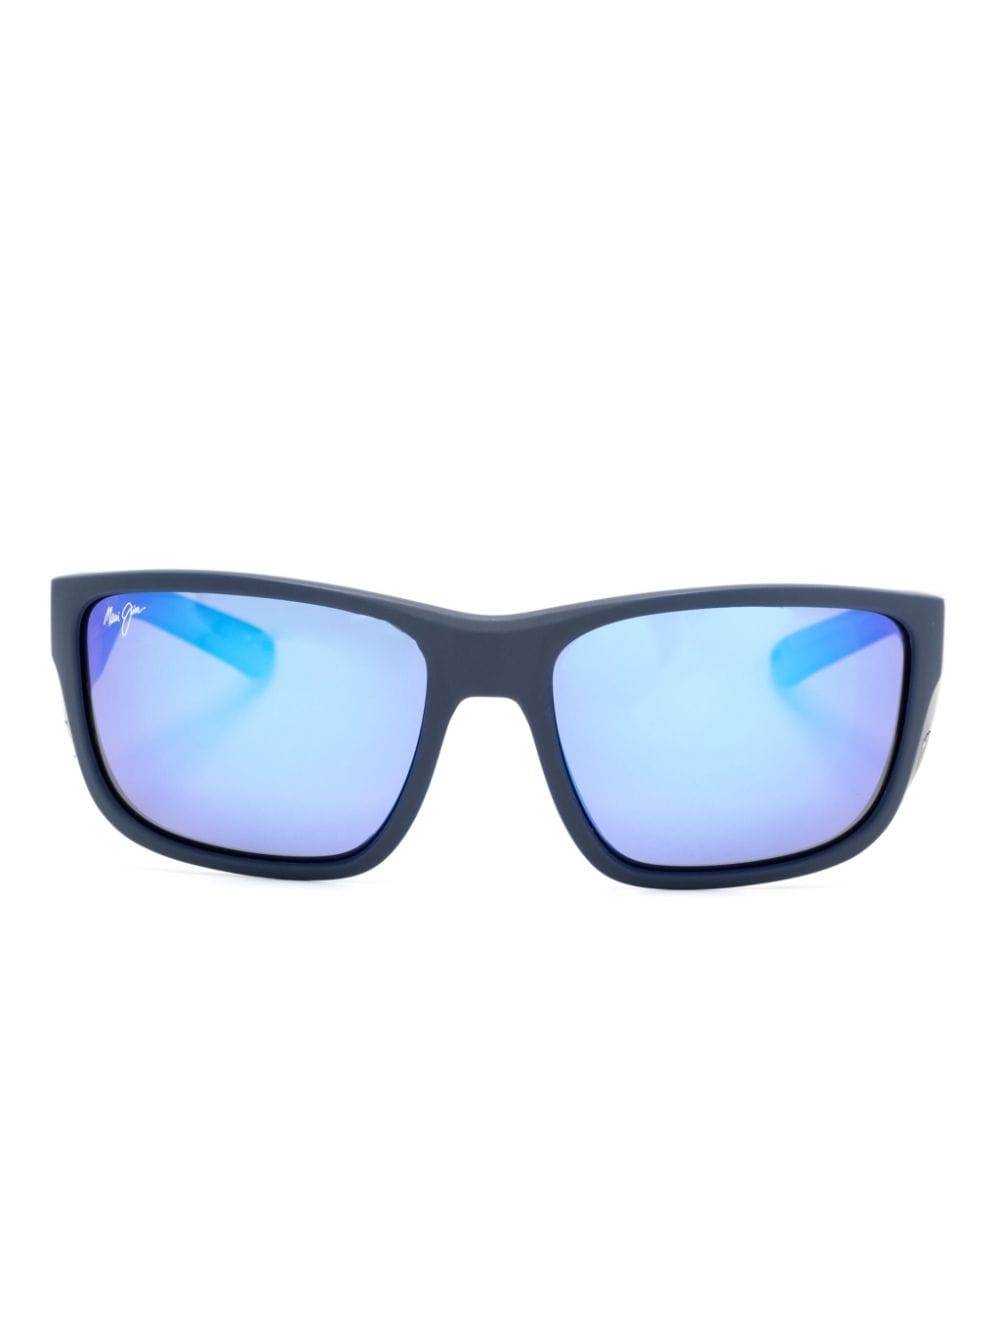 Amberjack square-frame sunglasses